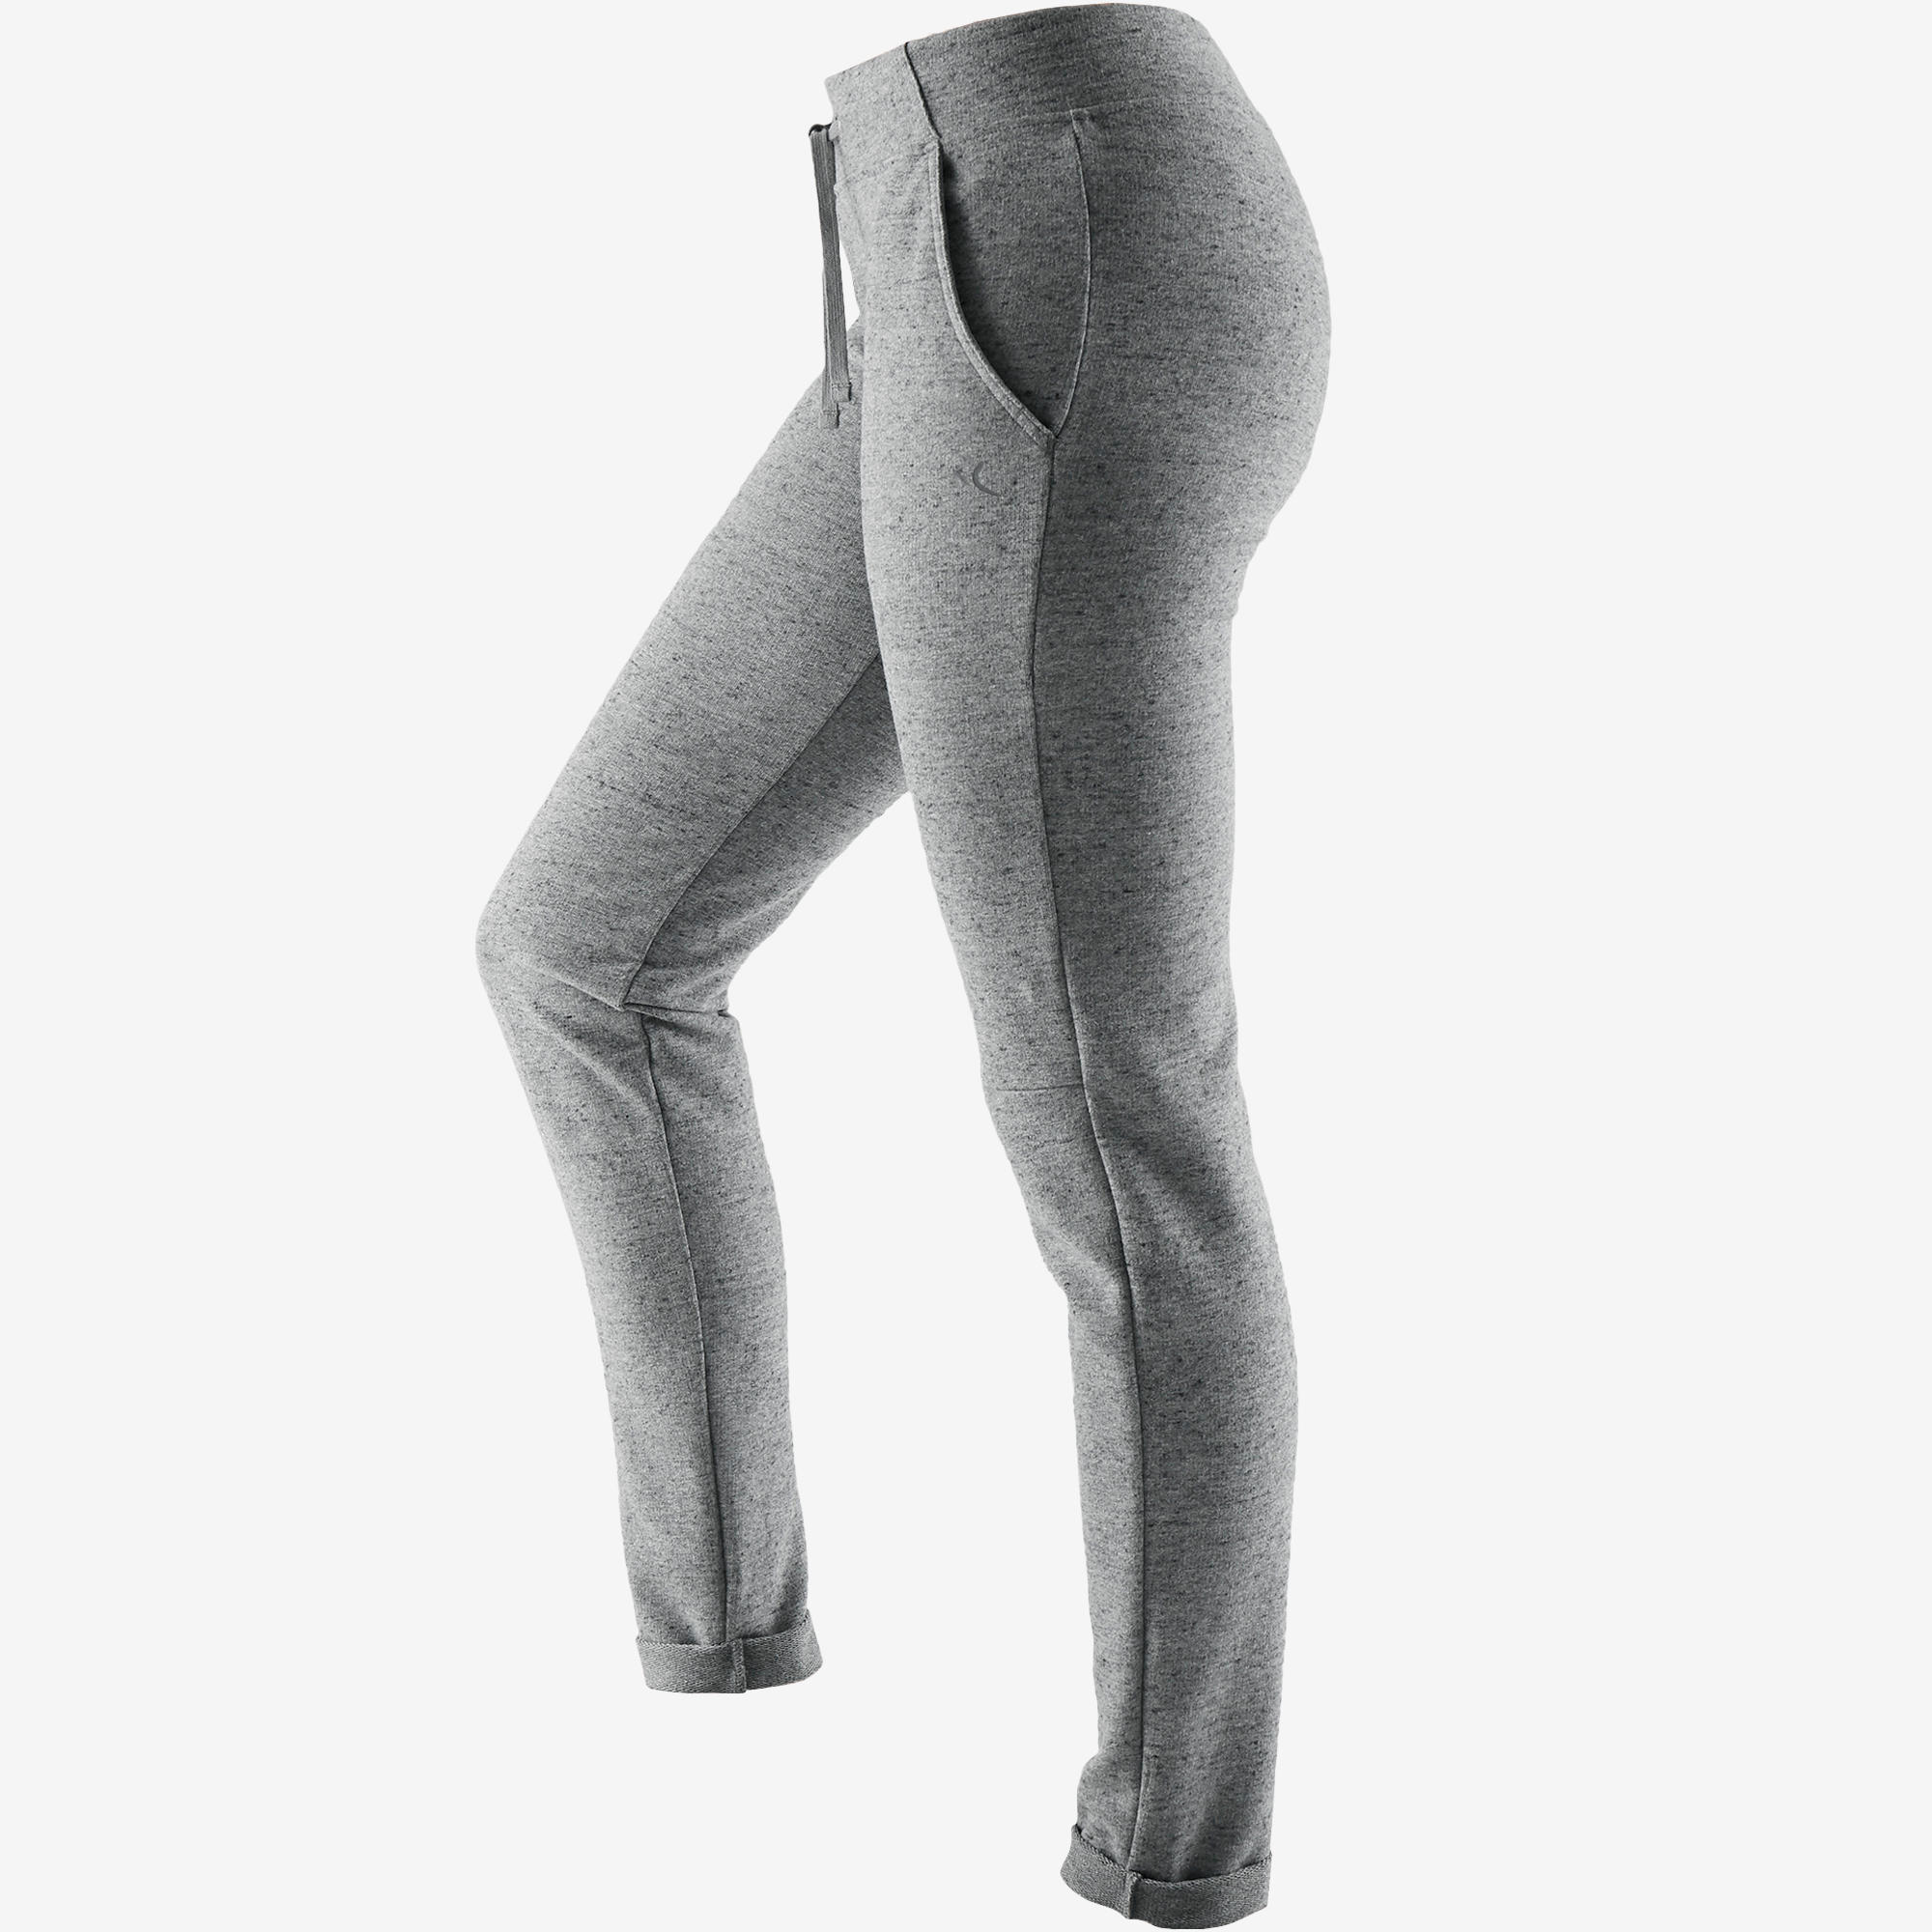 WOMEN'S SKIING WARM Pants - 180 - BLACK | Decathlon